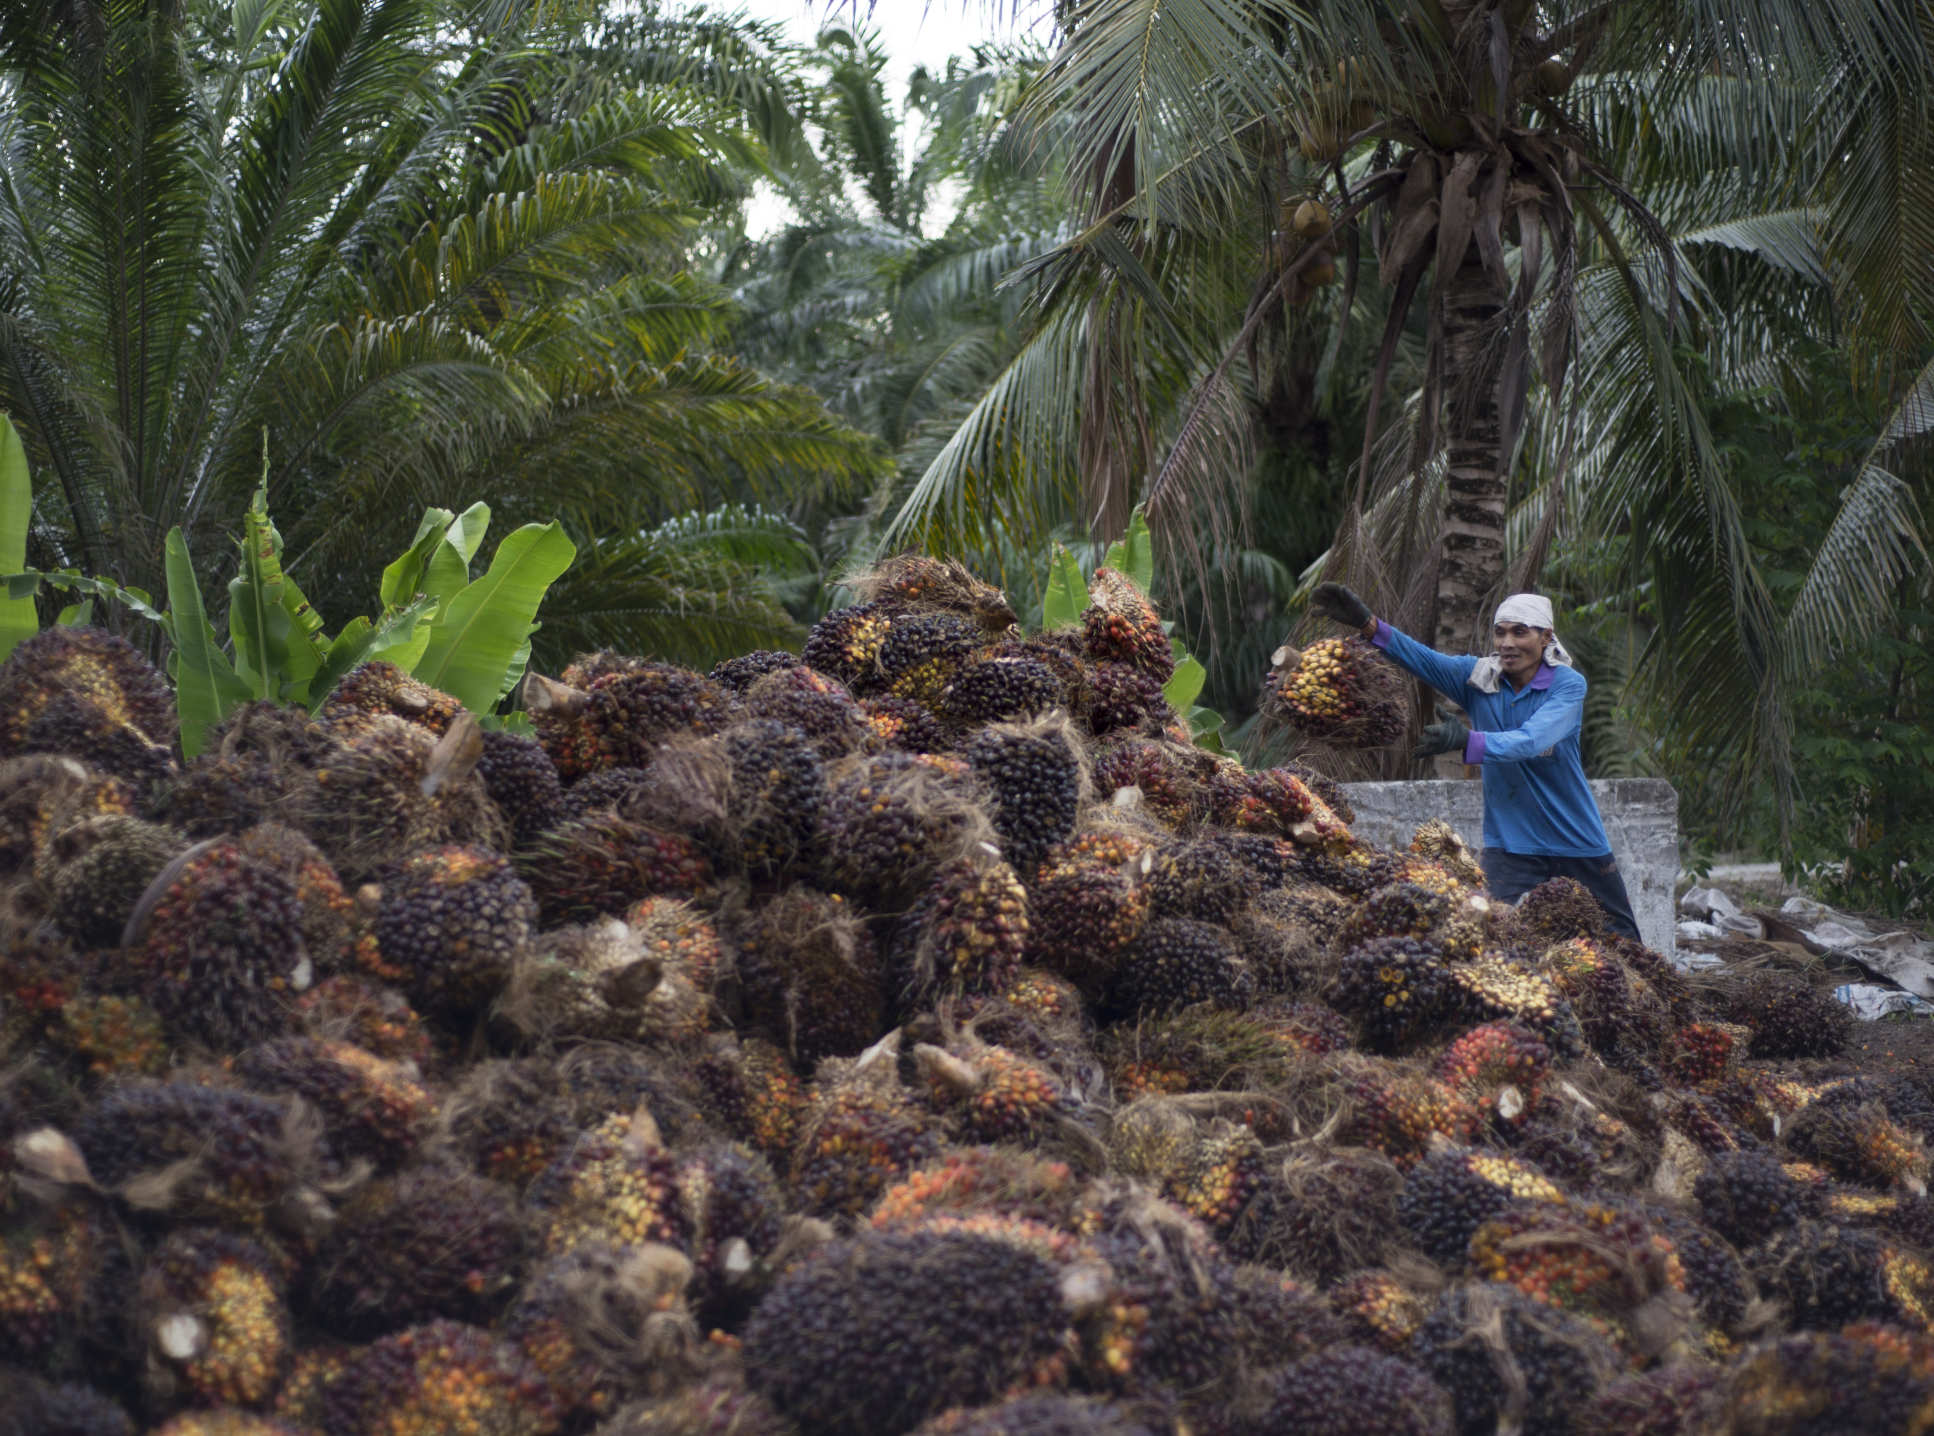 Woman harvesting palm oil